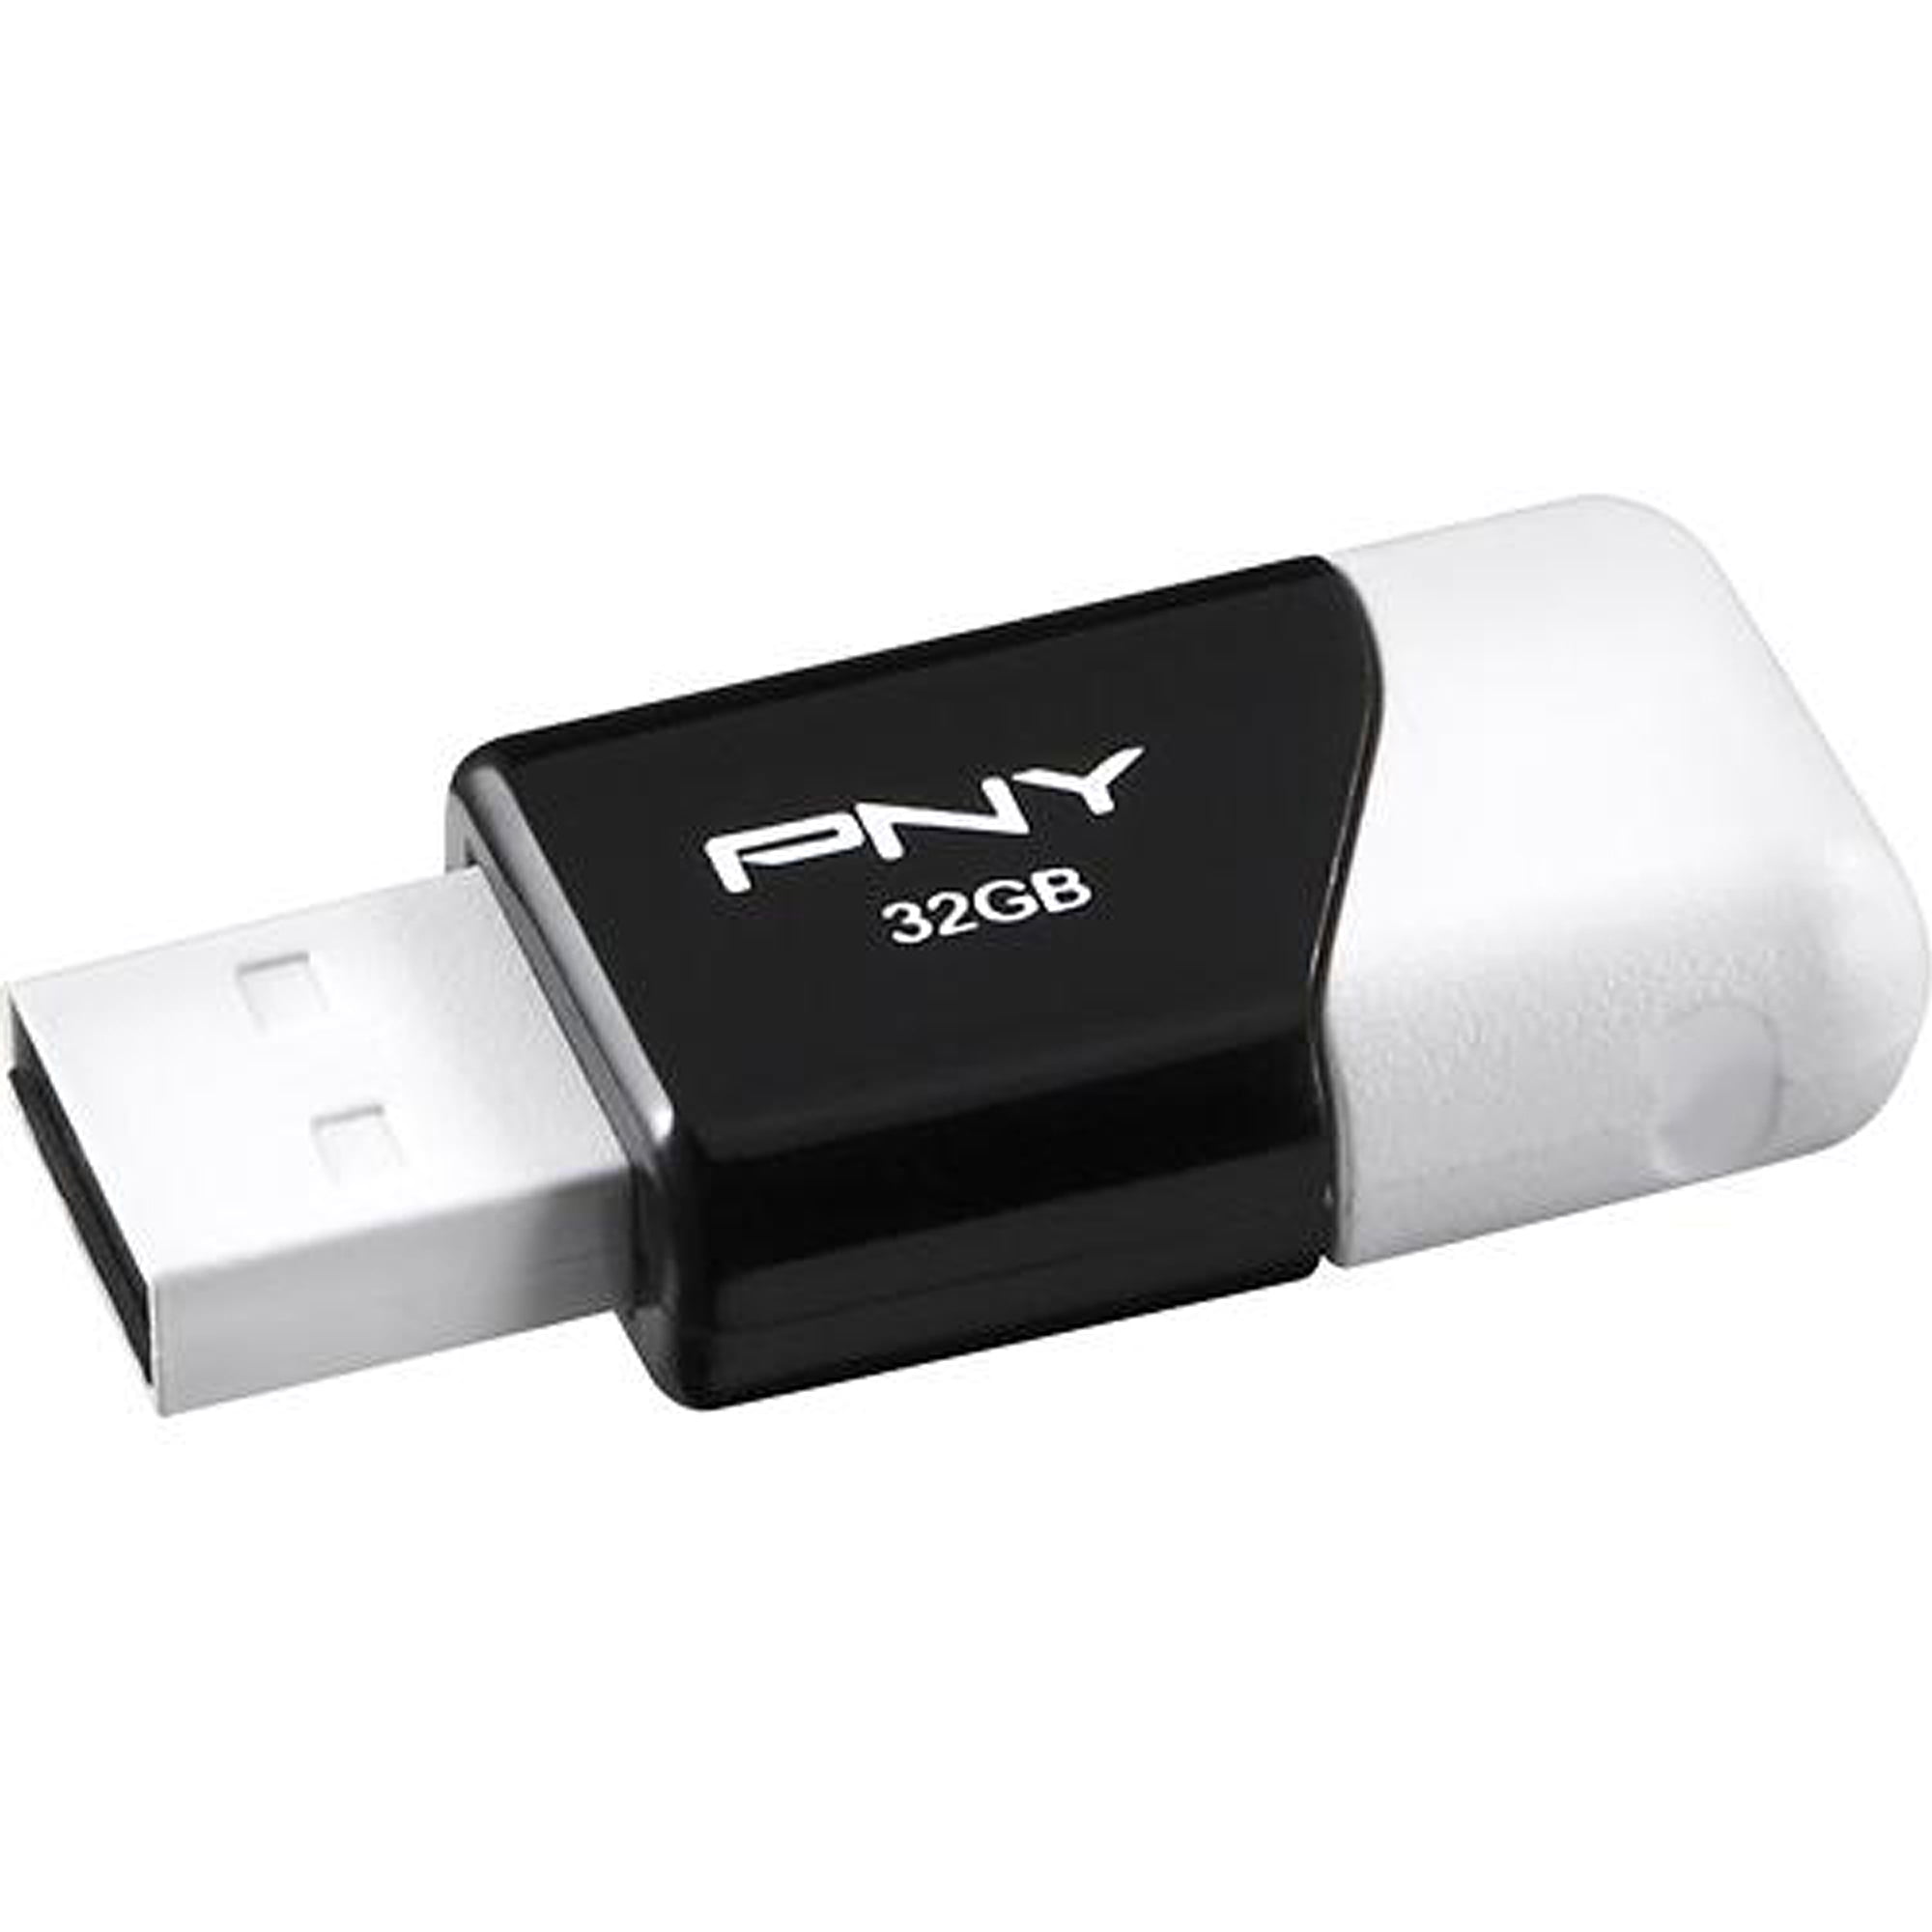 Flash 32.0. PNY 32gb 3.1. PNY/32 GB/PNY Attache 4 USB 2.0. Флешка PNY Attache 3.0 32gb. PNY 256gb attache4 USB3.1.